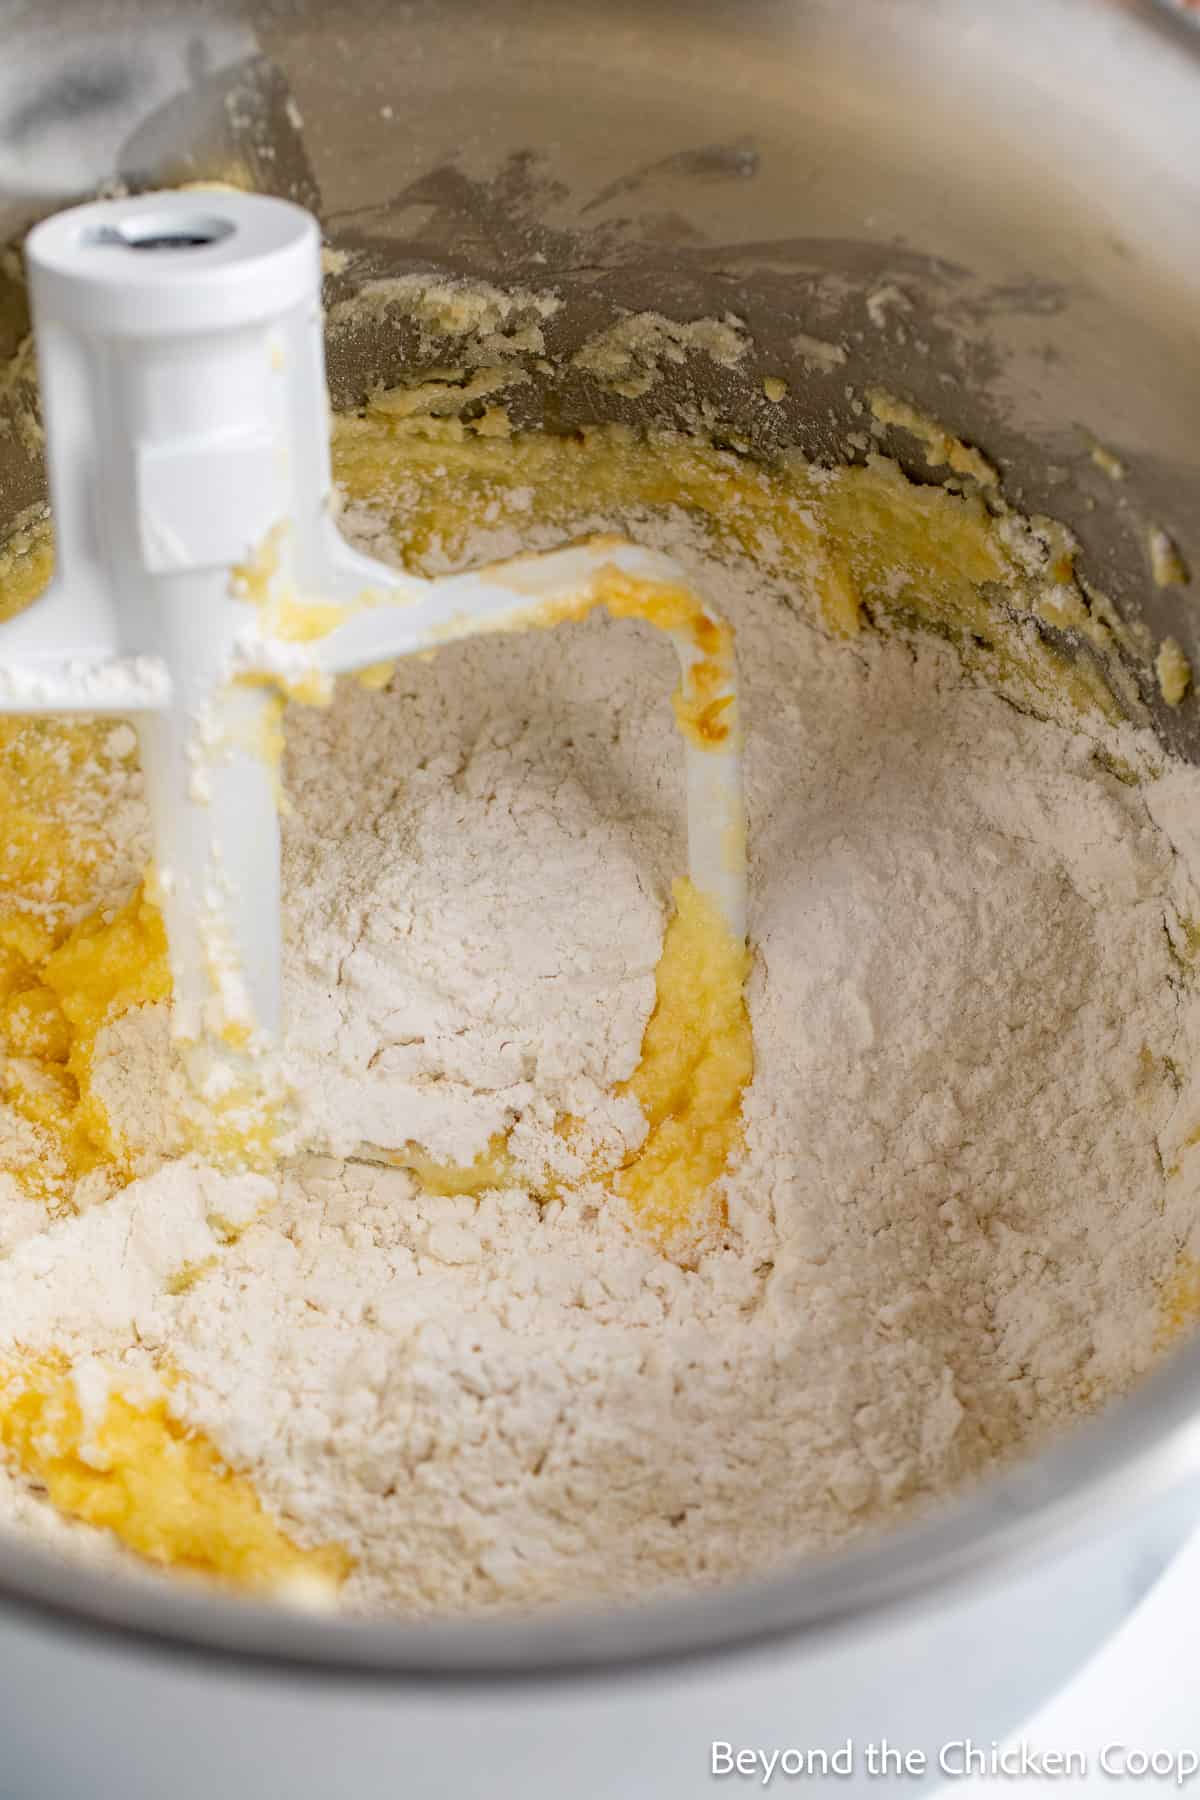 Flour added to cake batter. 